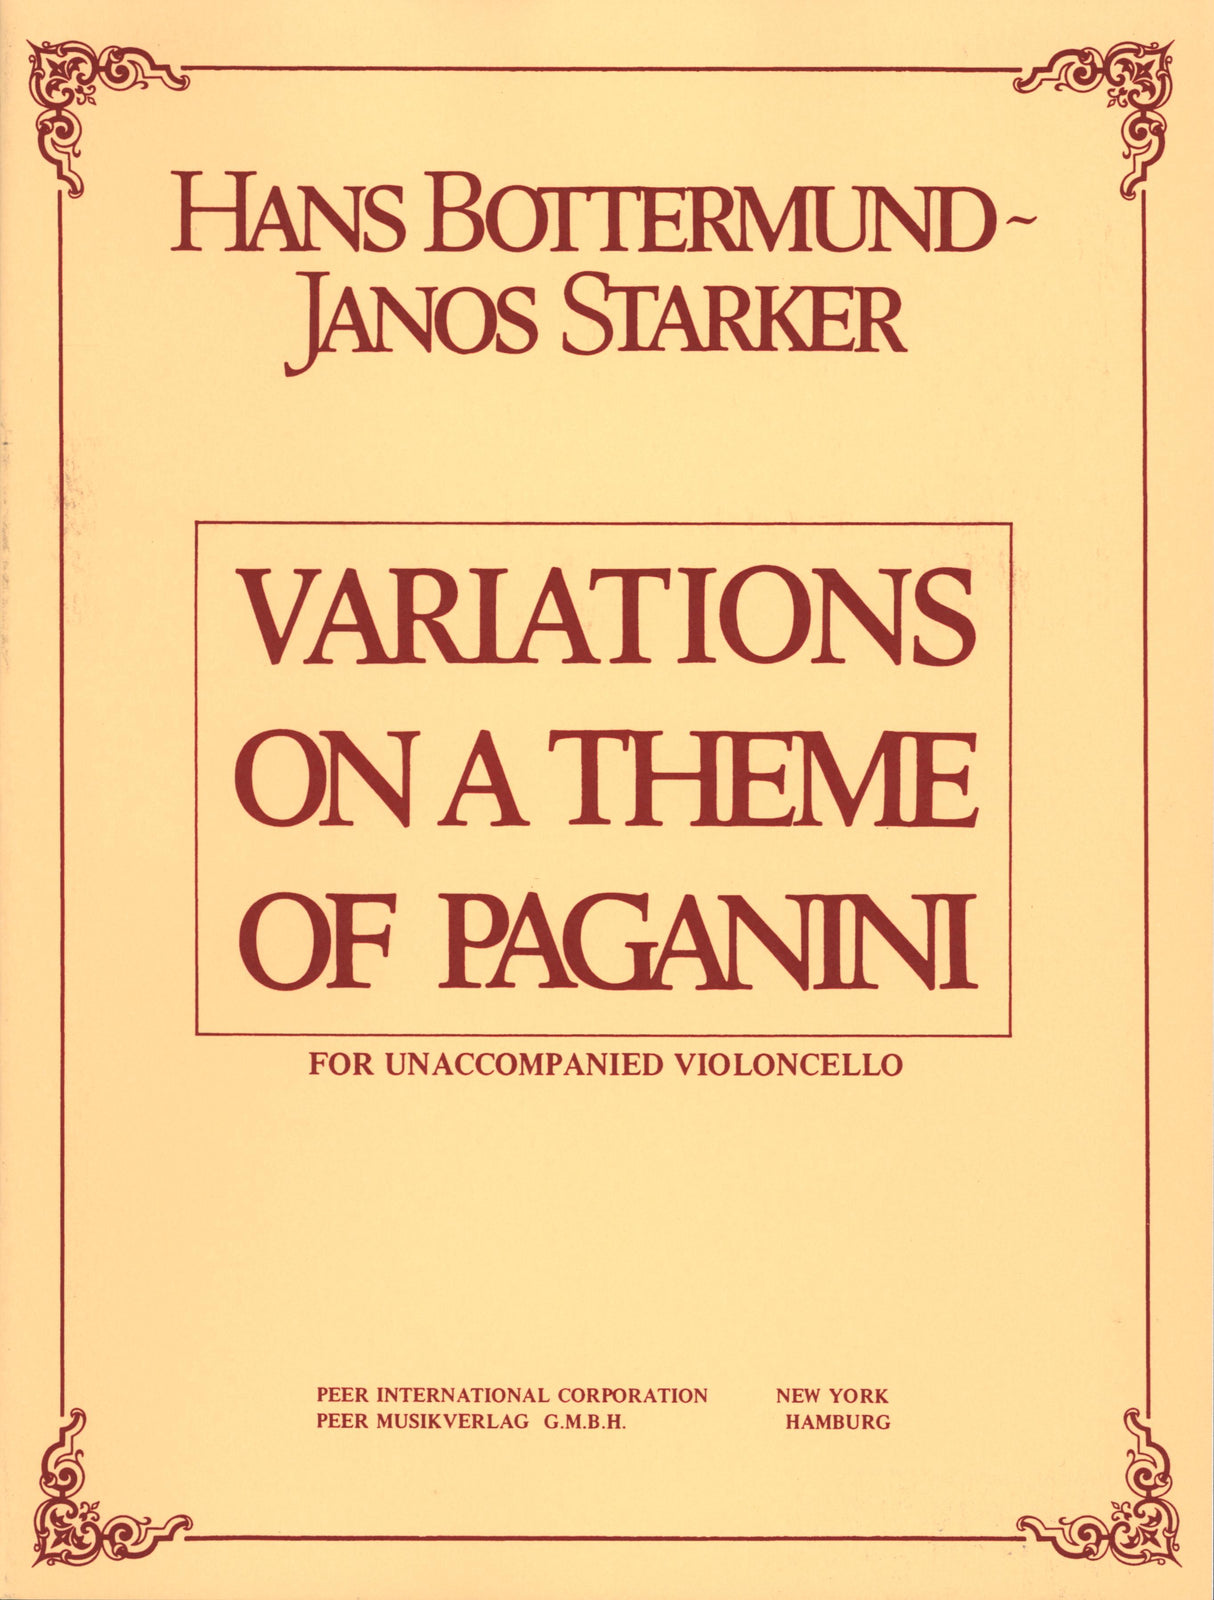 Bottermund-Starker: Variations on a Theme of Paganini